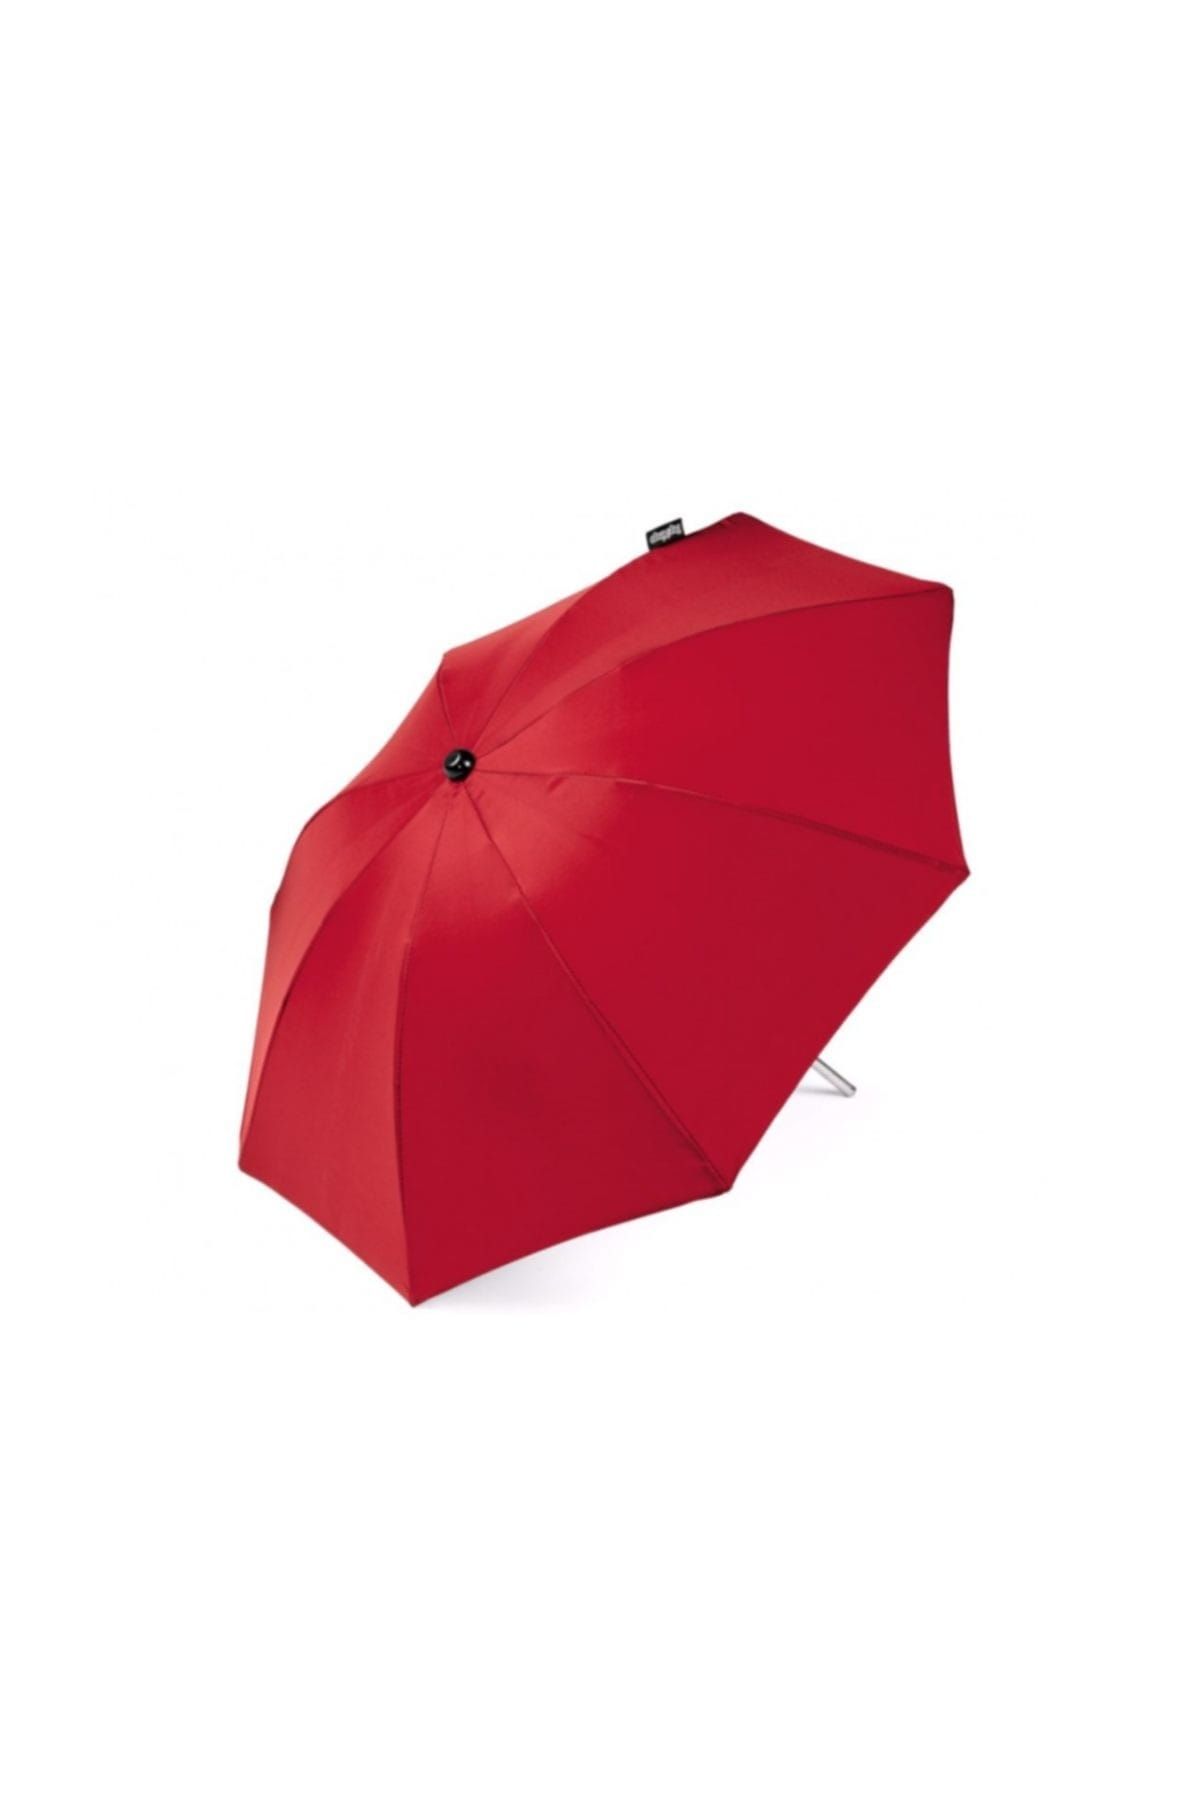 Peg Perego Şemsiye Red /